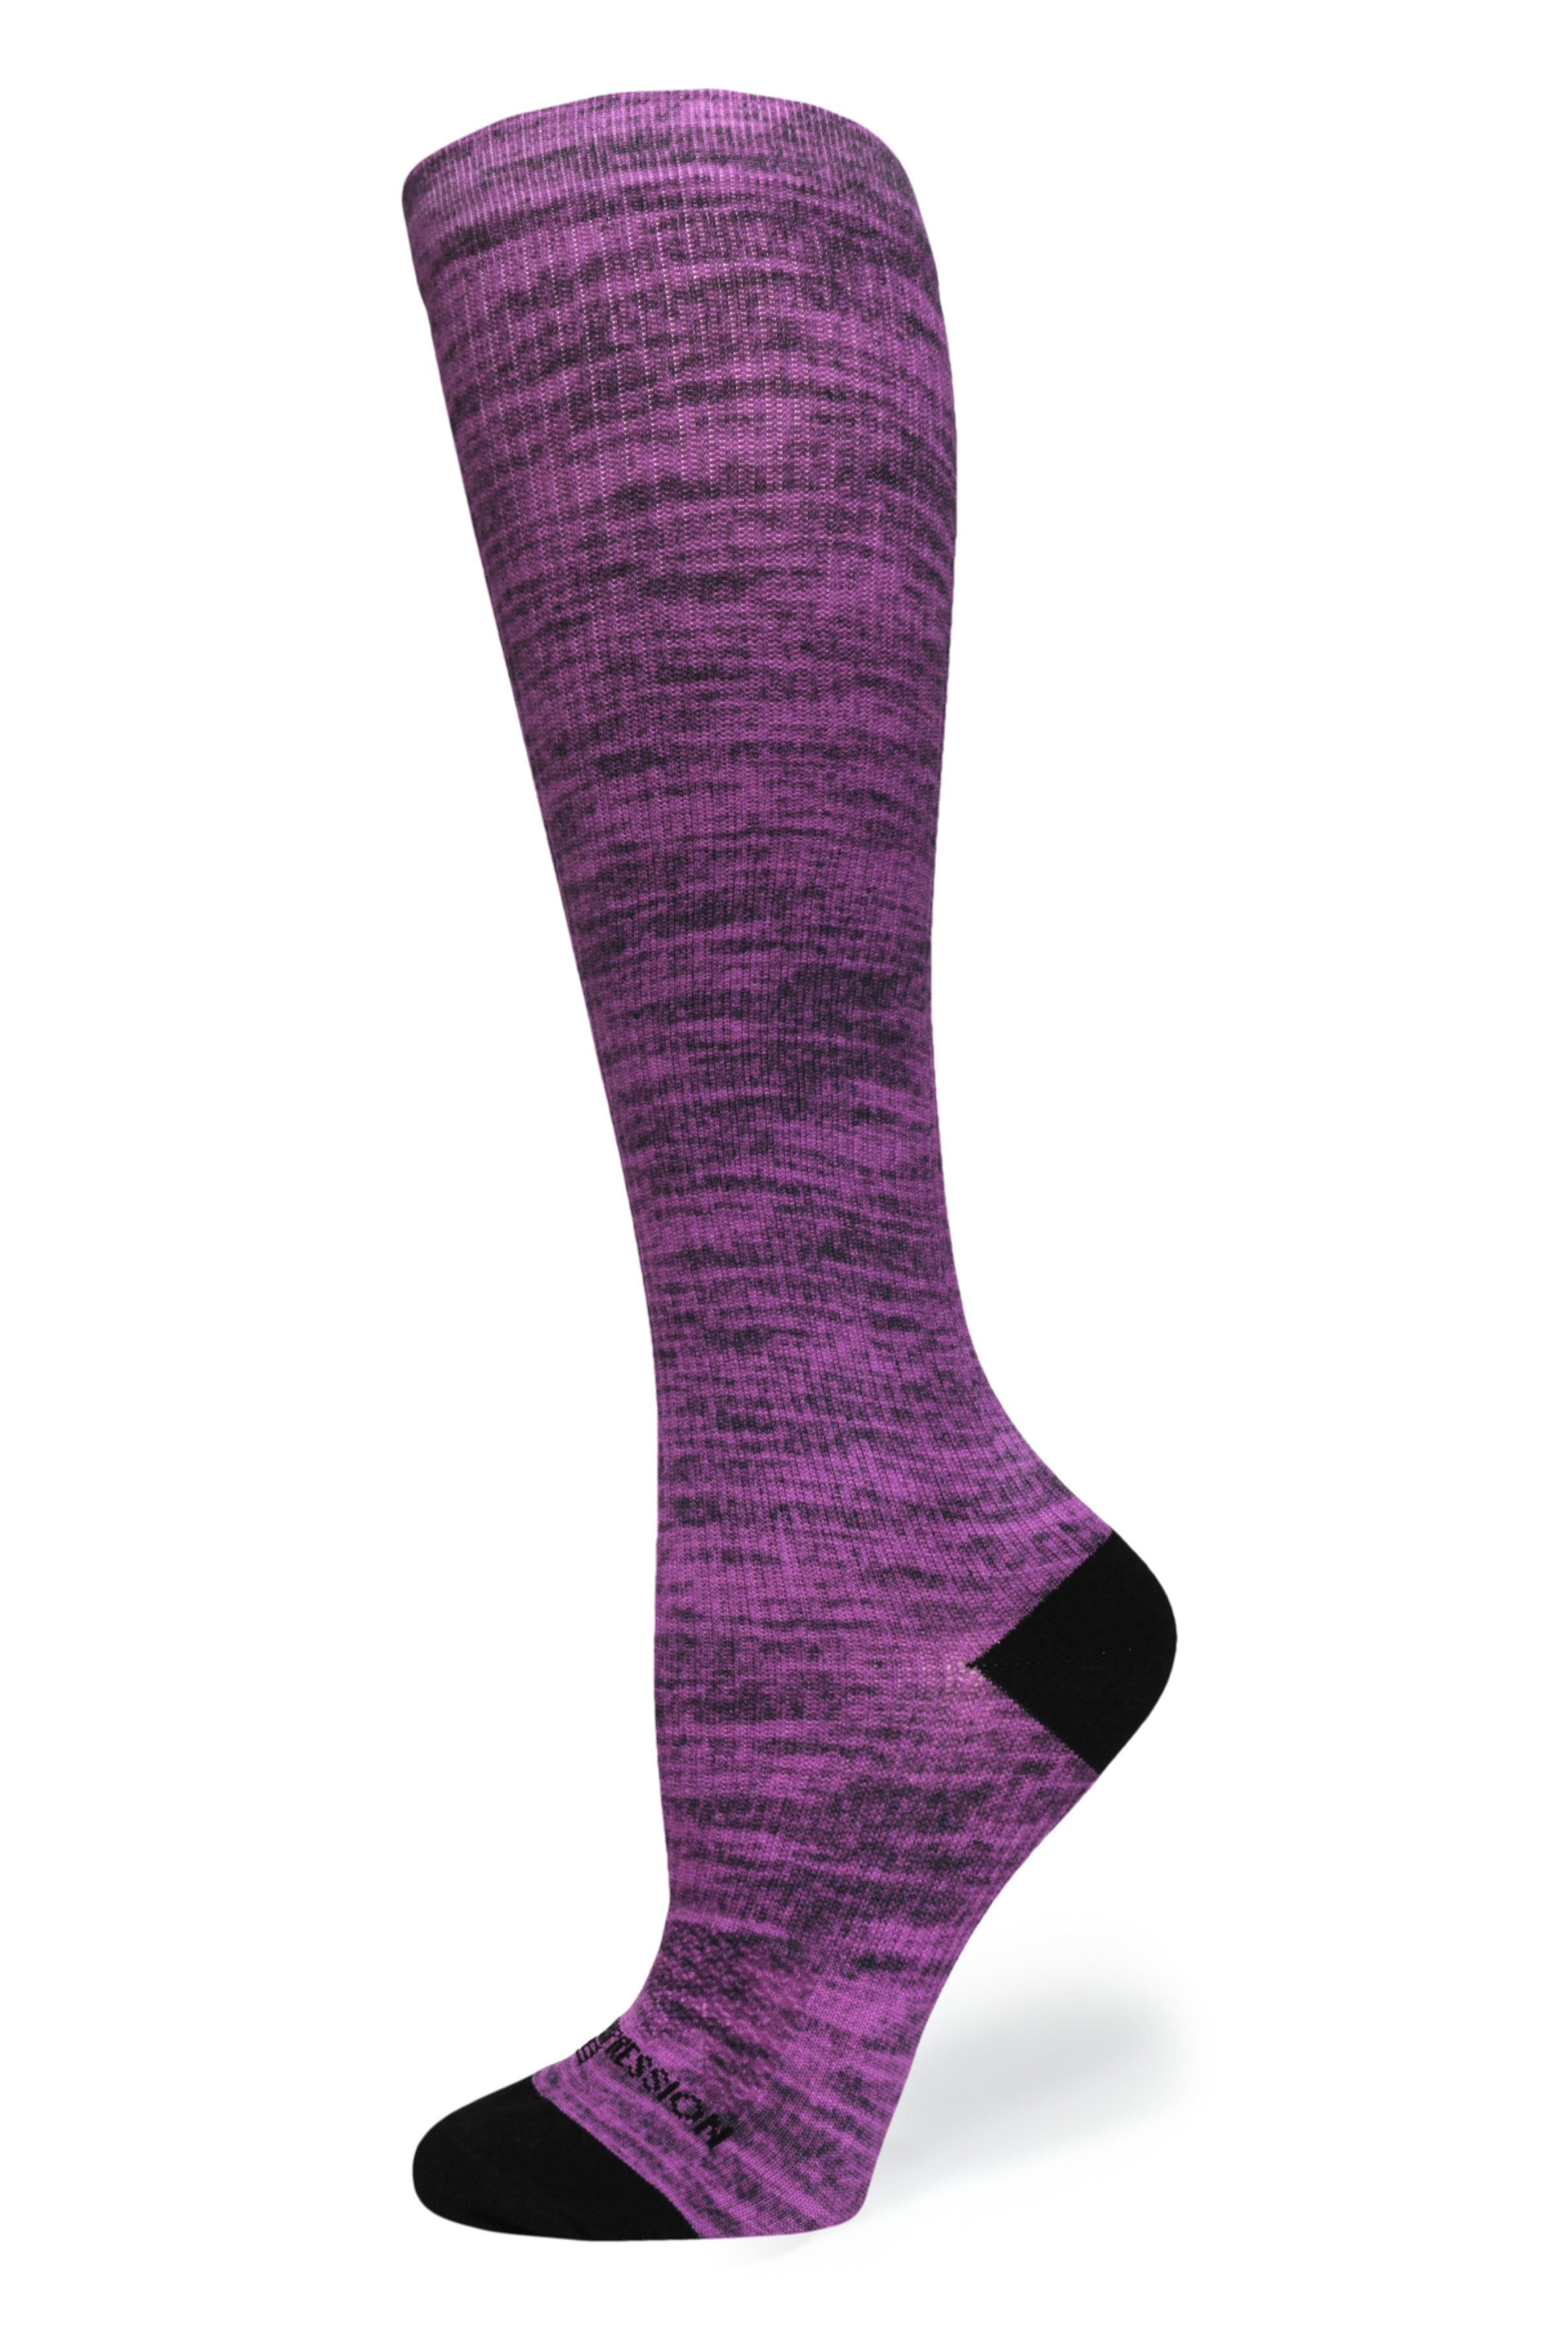 360 Purple Heather OTC Compression Socks (Standard & Extra Wide)